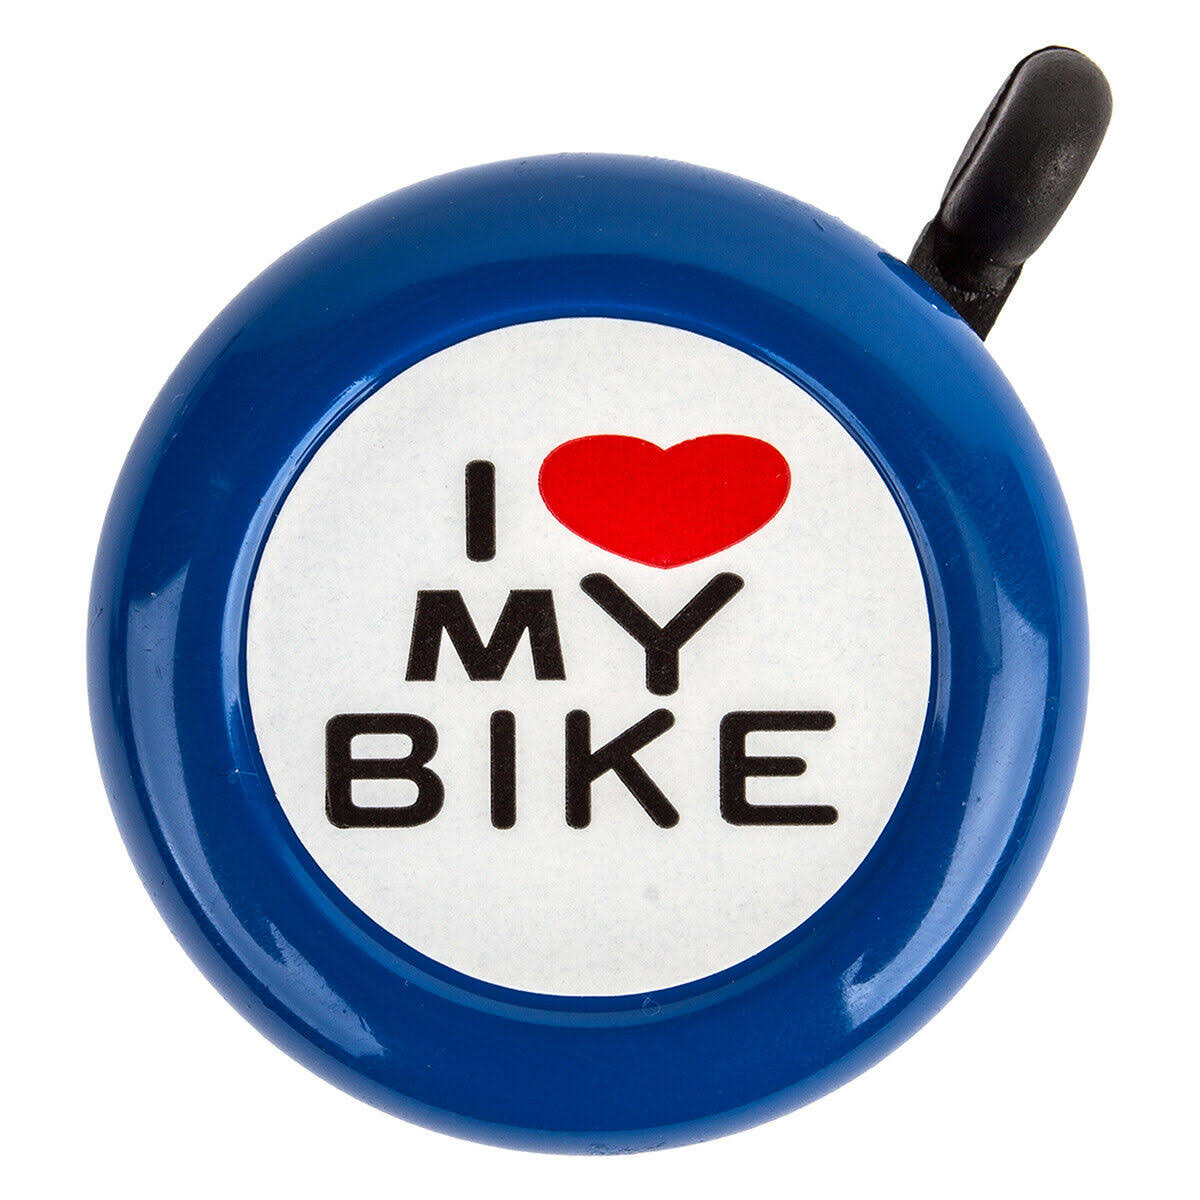 Sunlite "I Love My Bike" Bell - Blue